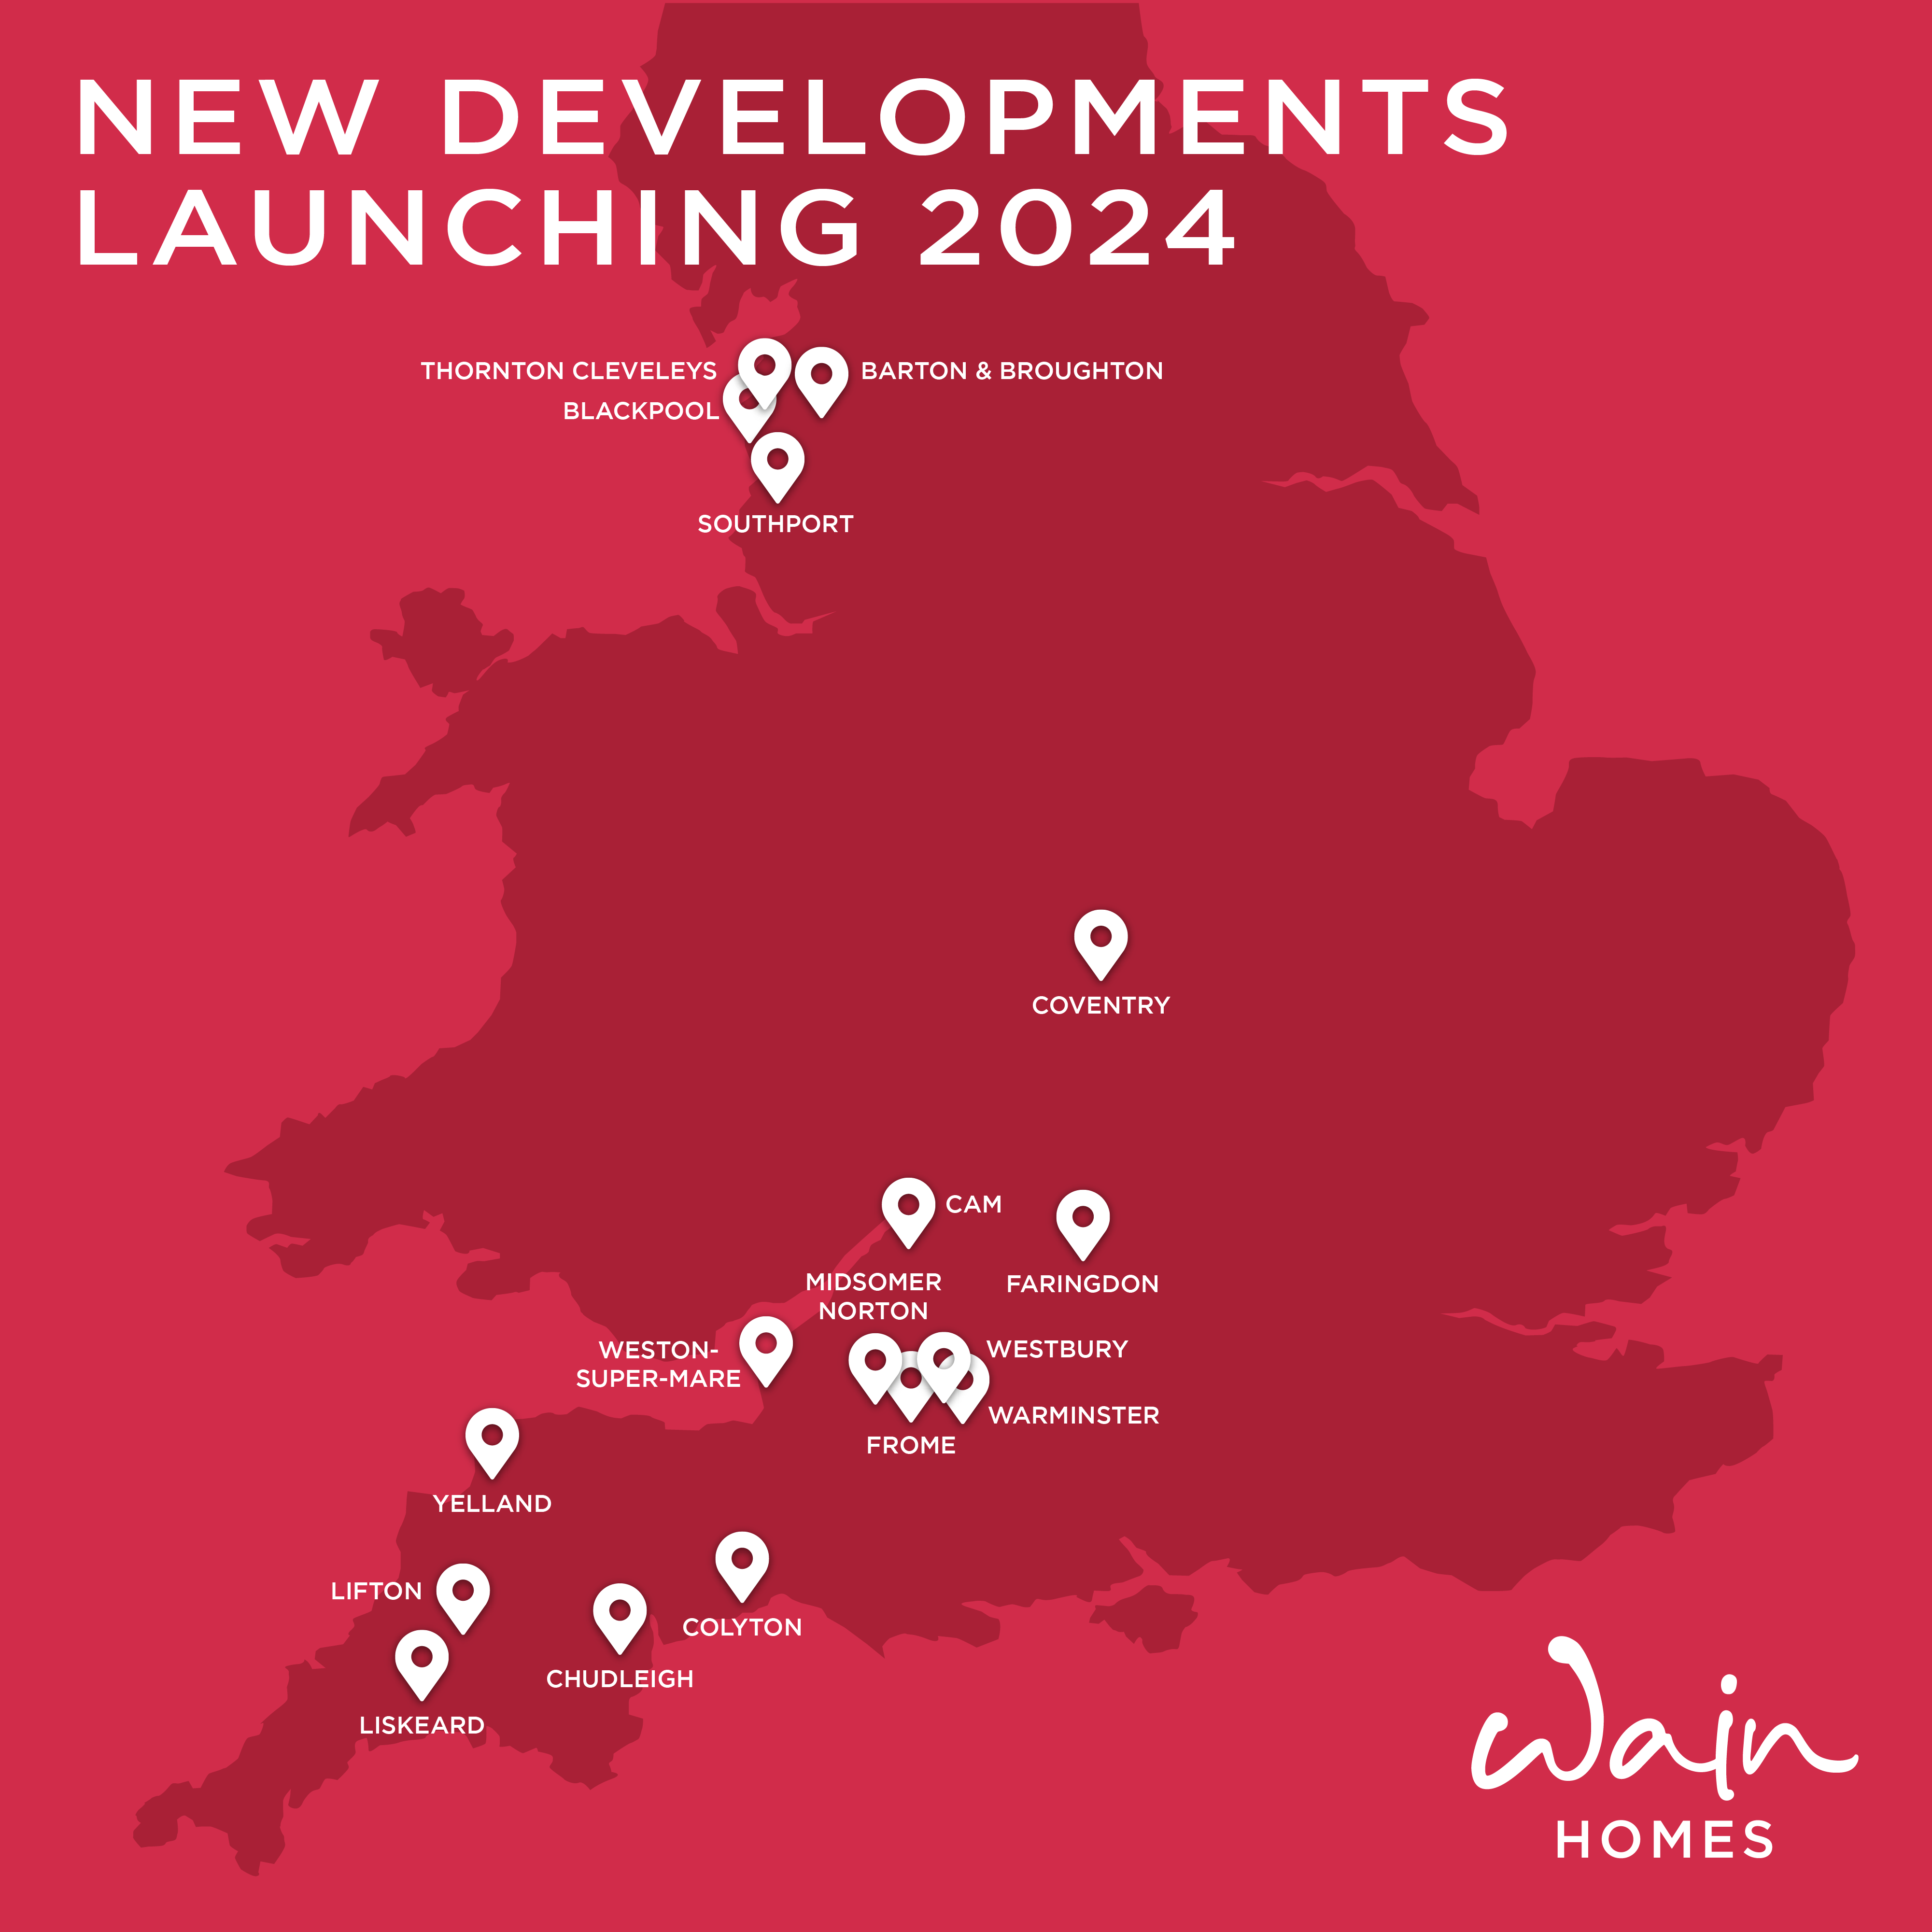 Sixteen new developments launching across the UK this year